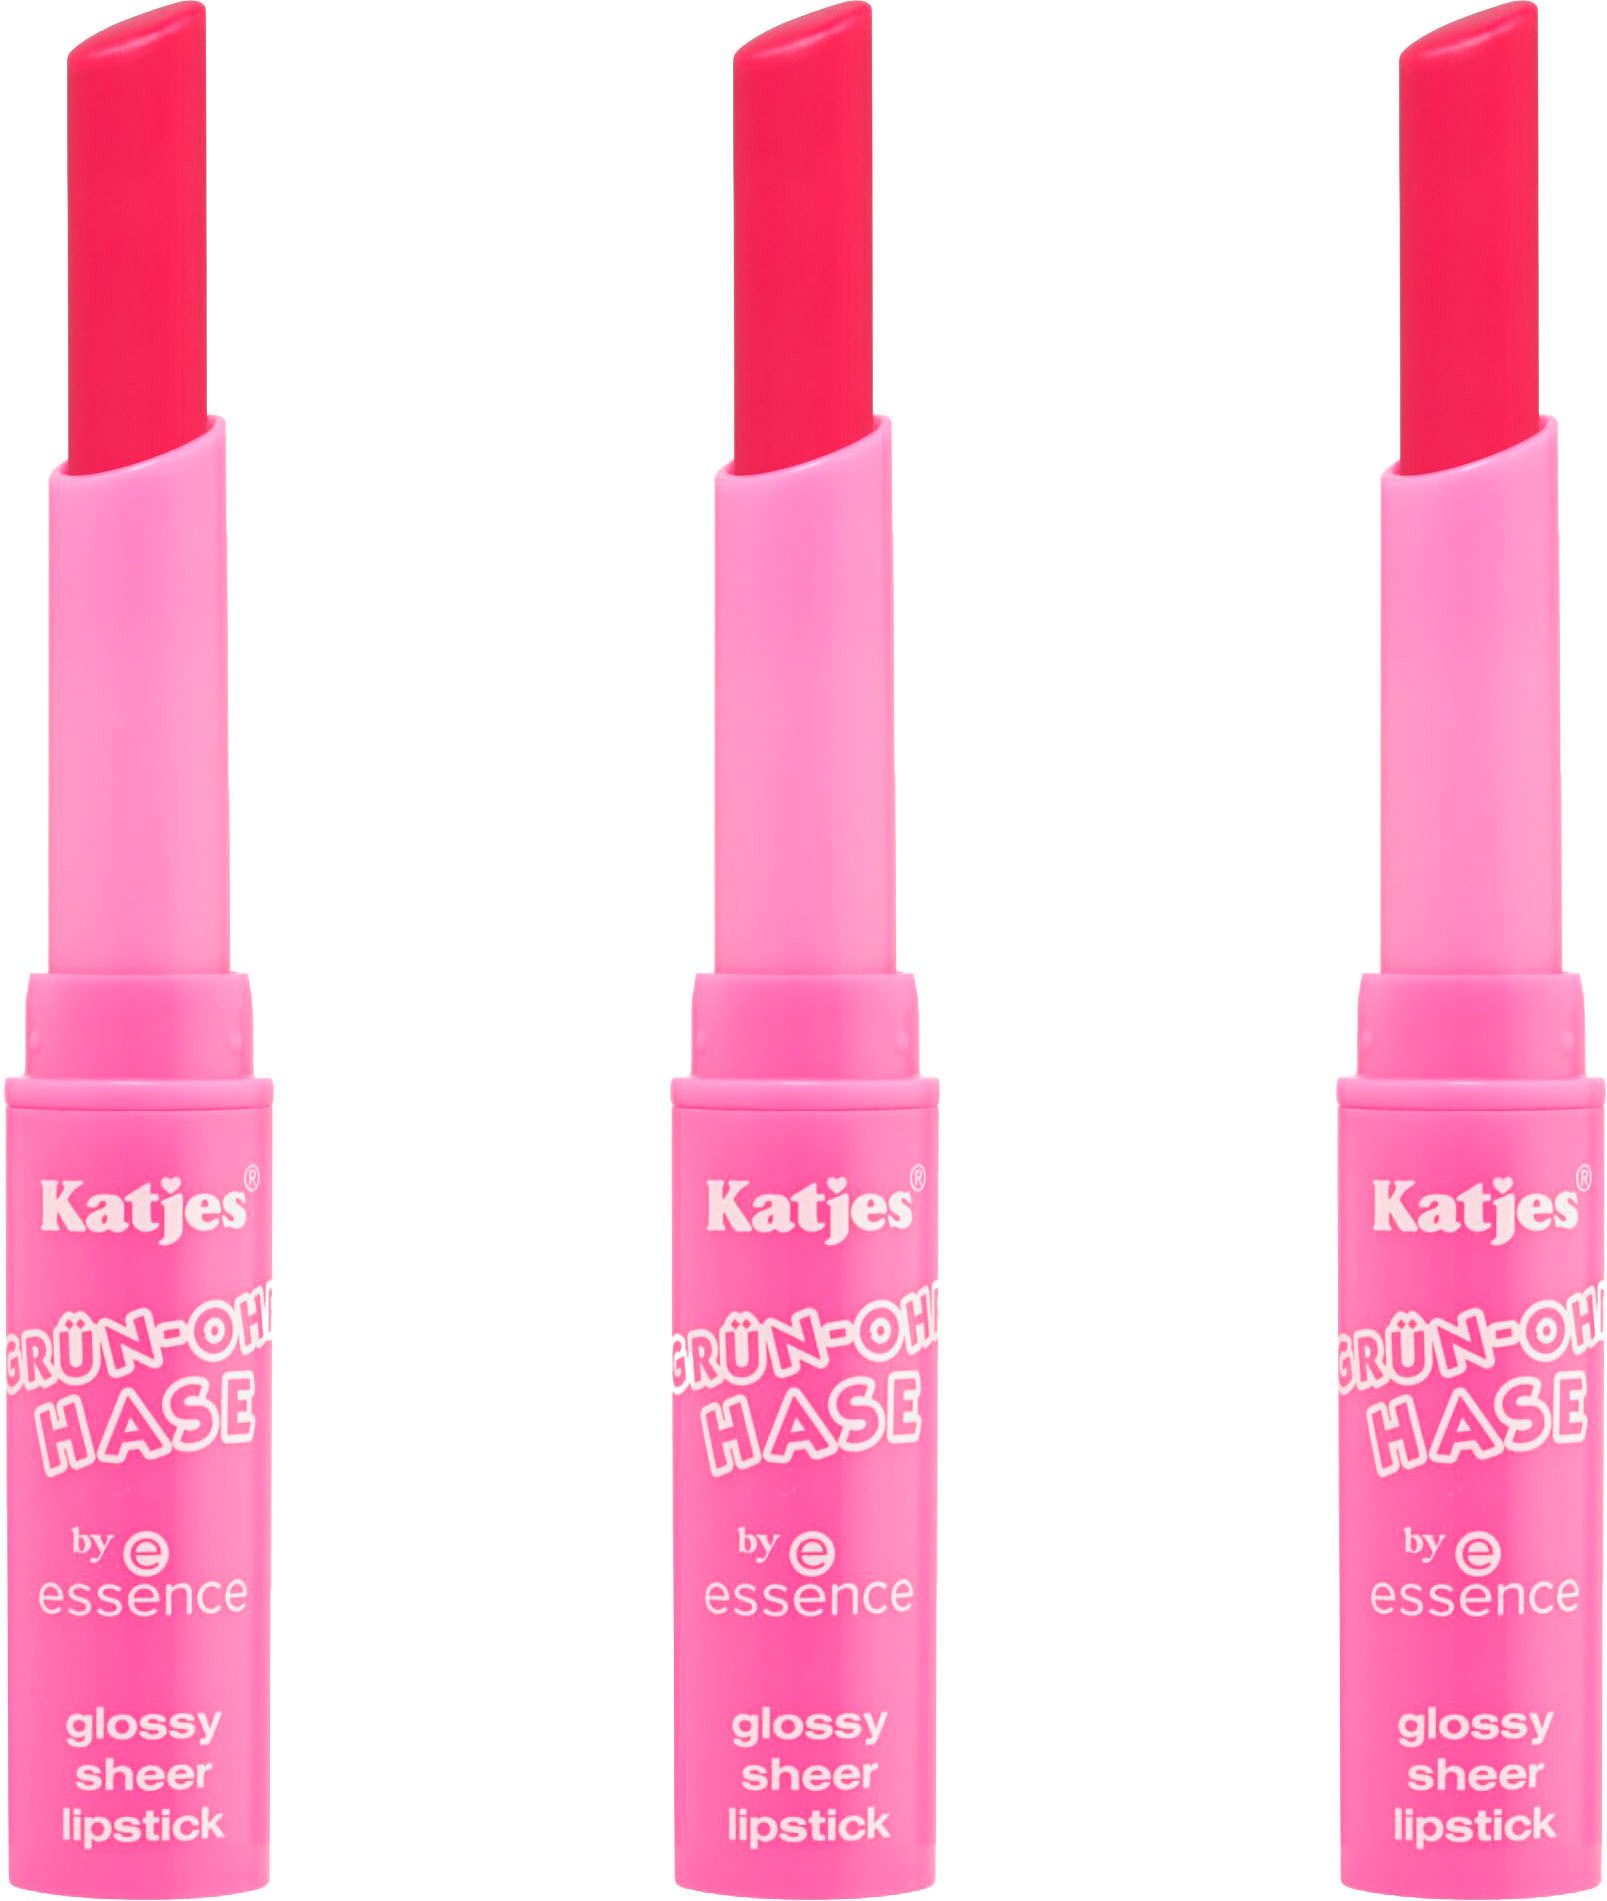 Essence Lippenstift Katjes GRÜN-OHR HASE by essence glossy sheer lipstick, 3-tlg.